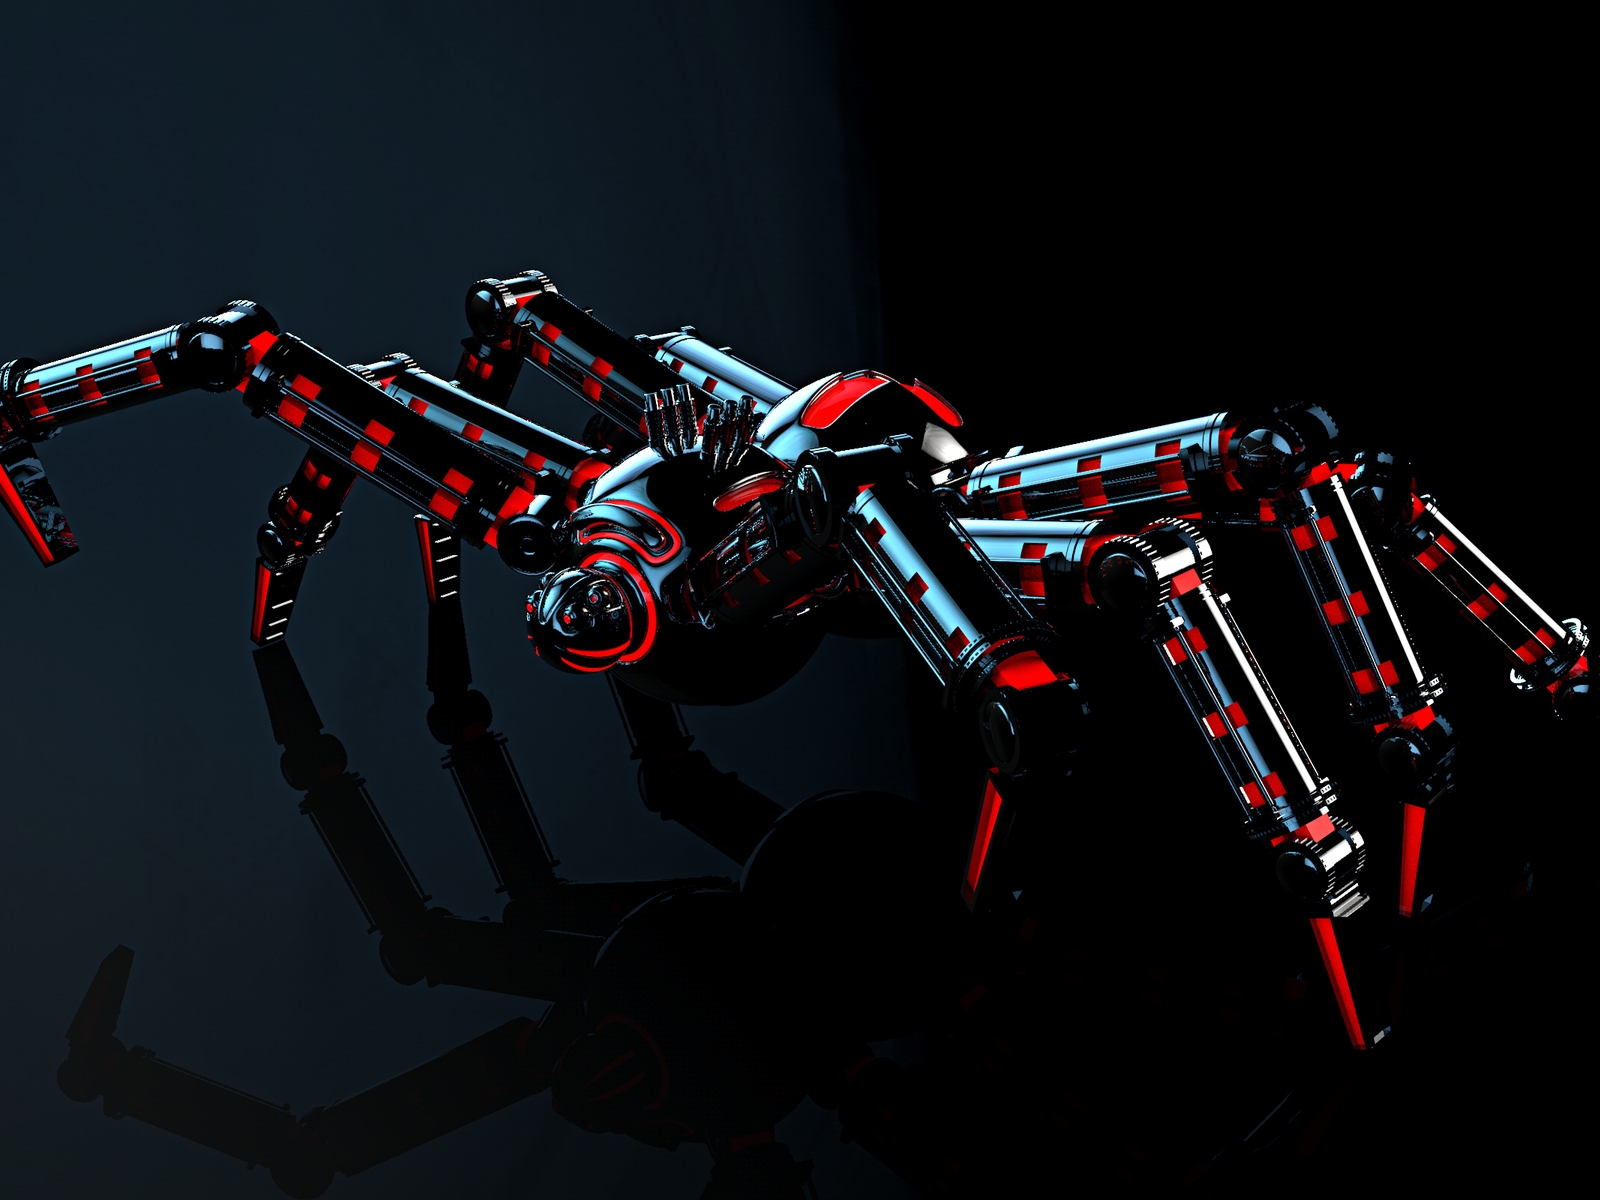 Spider Robot for 1600 x 1200 resolution